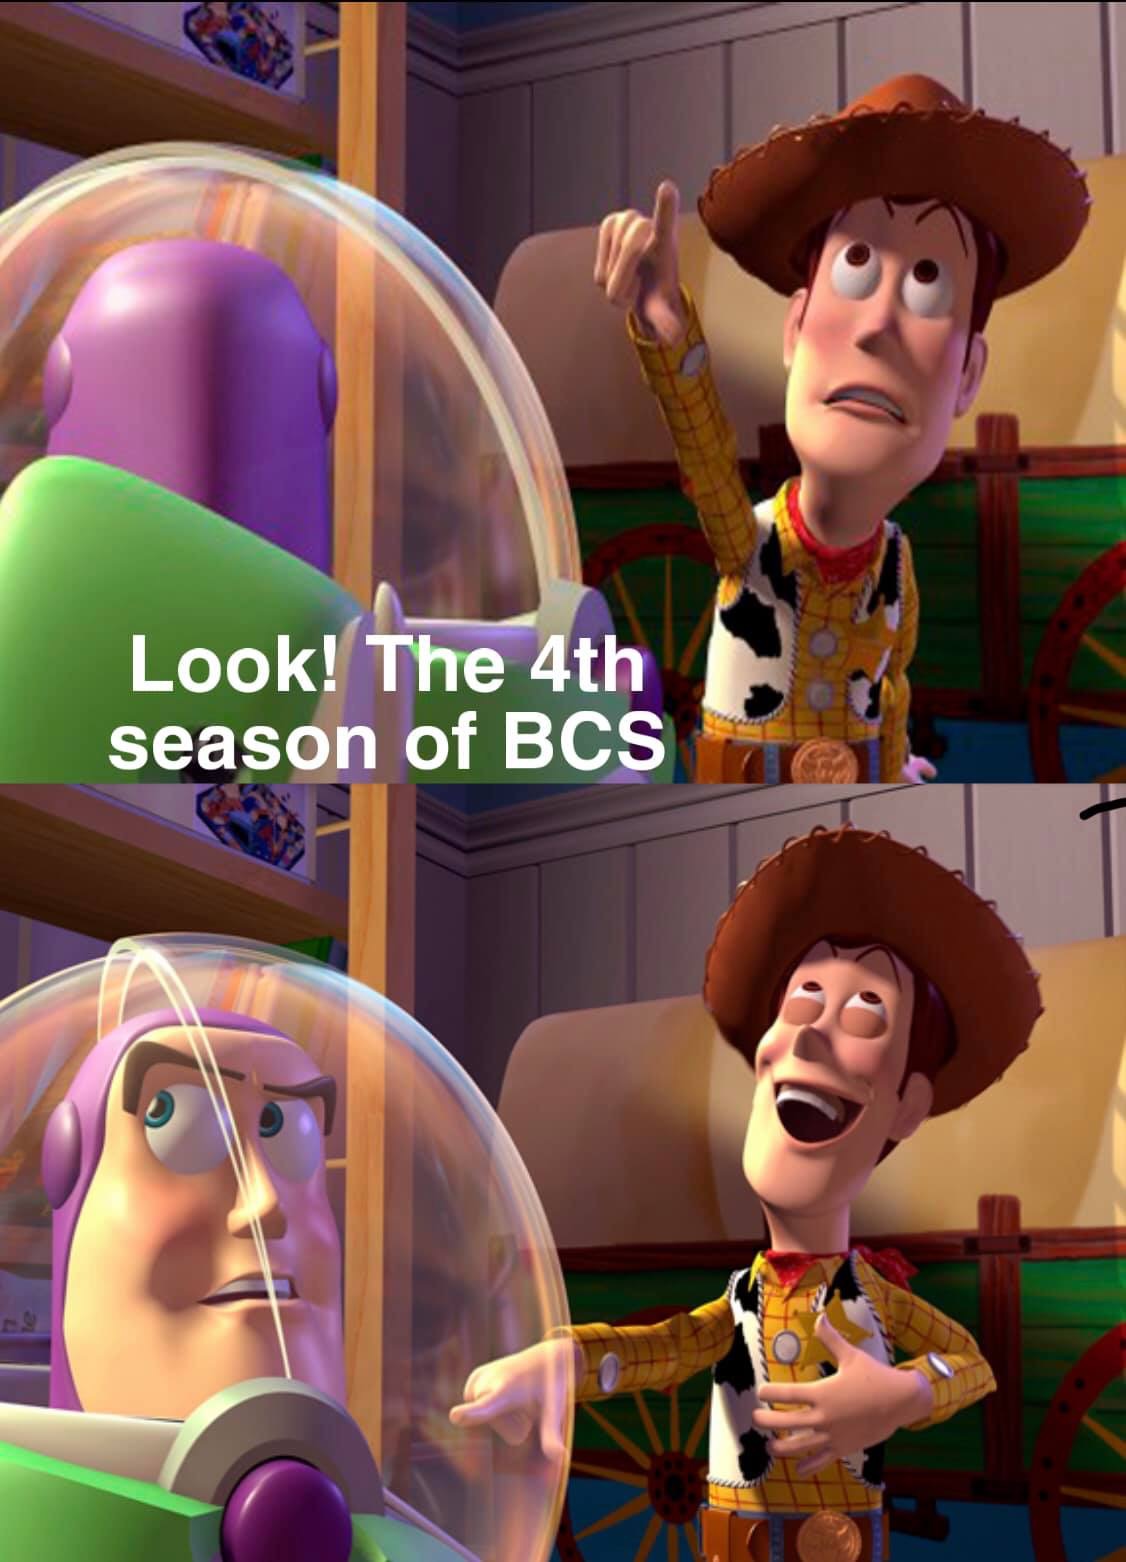 buzz look an alien - Look! The 4th season of Bcs